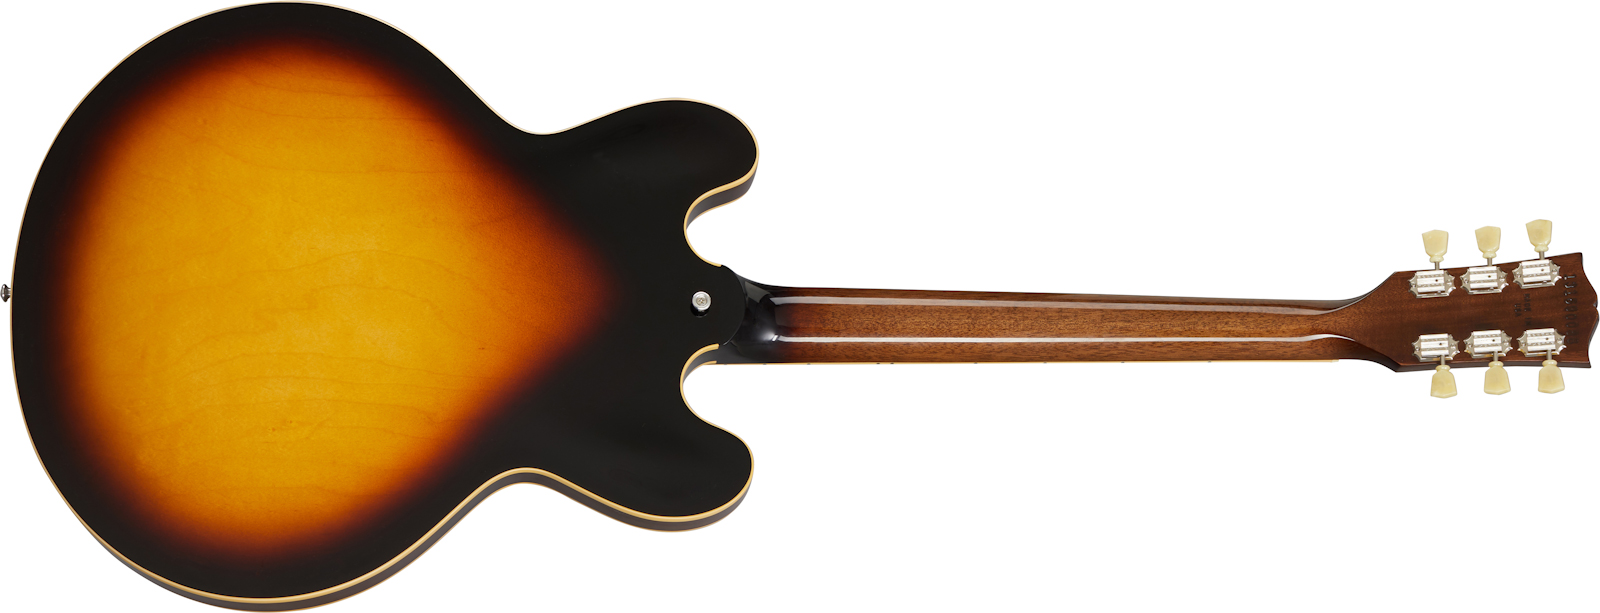 Gibson Es-335 Dot Original 2020 2h Ht Rw - Vintage Burst - Semi-hollow electric guitar - Variation 1